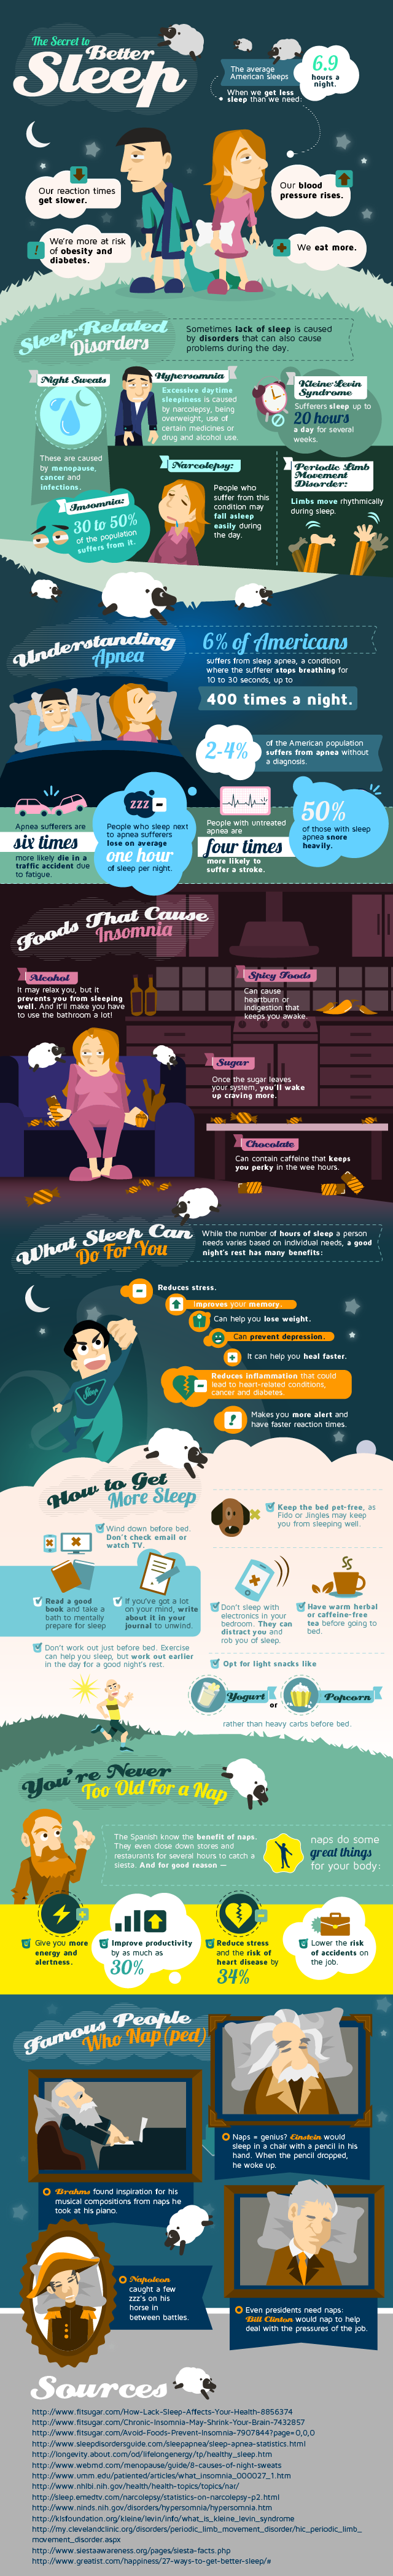 The-Secret-to-Better-Sleep-Infographic1